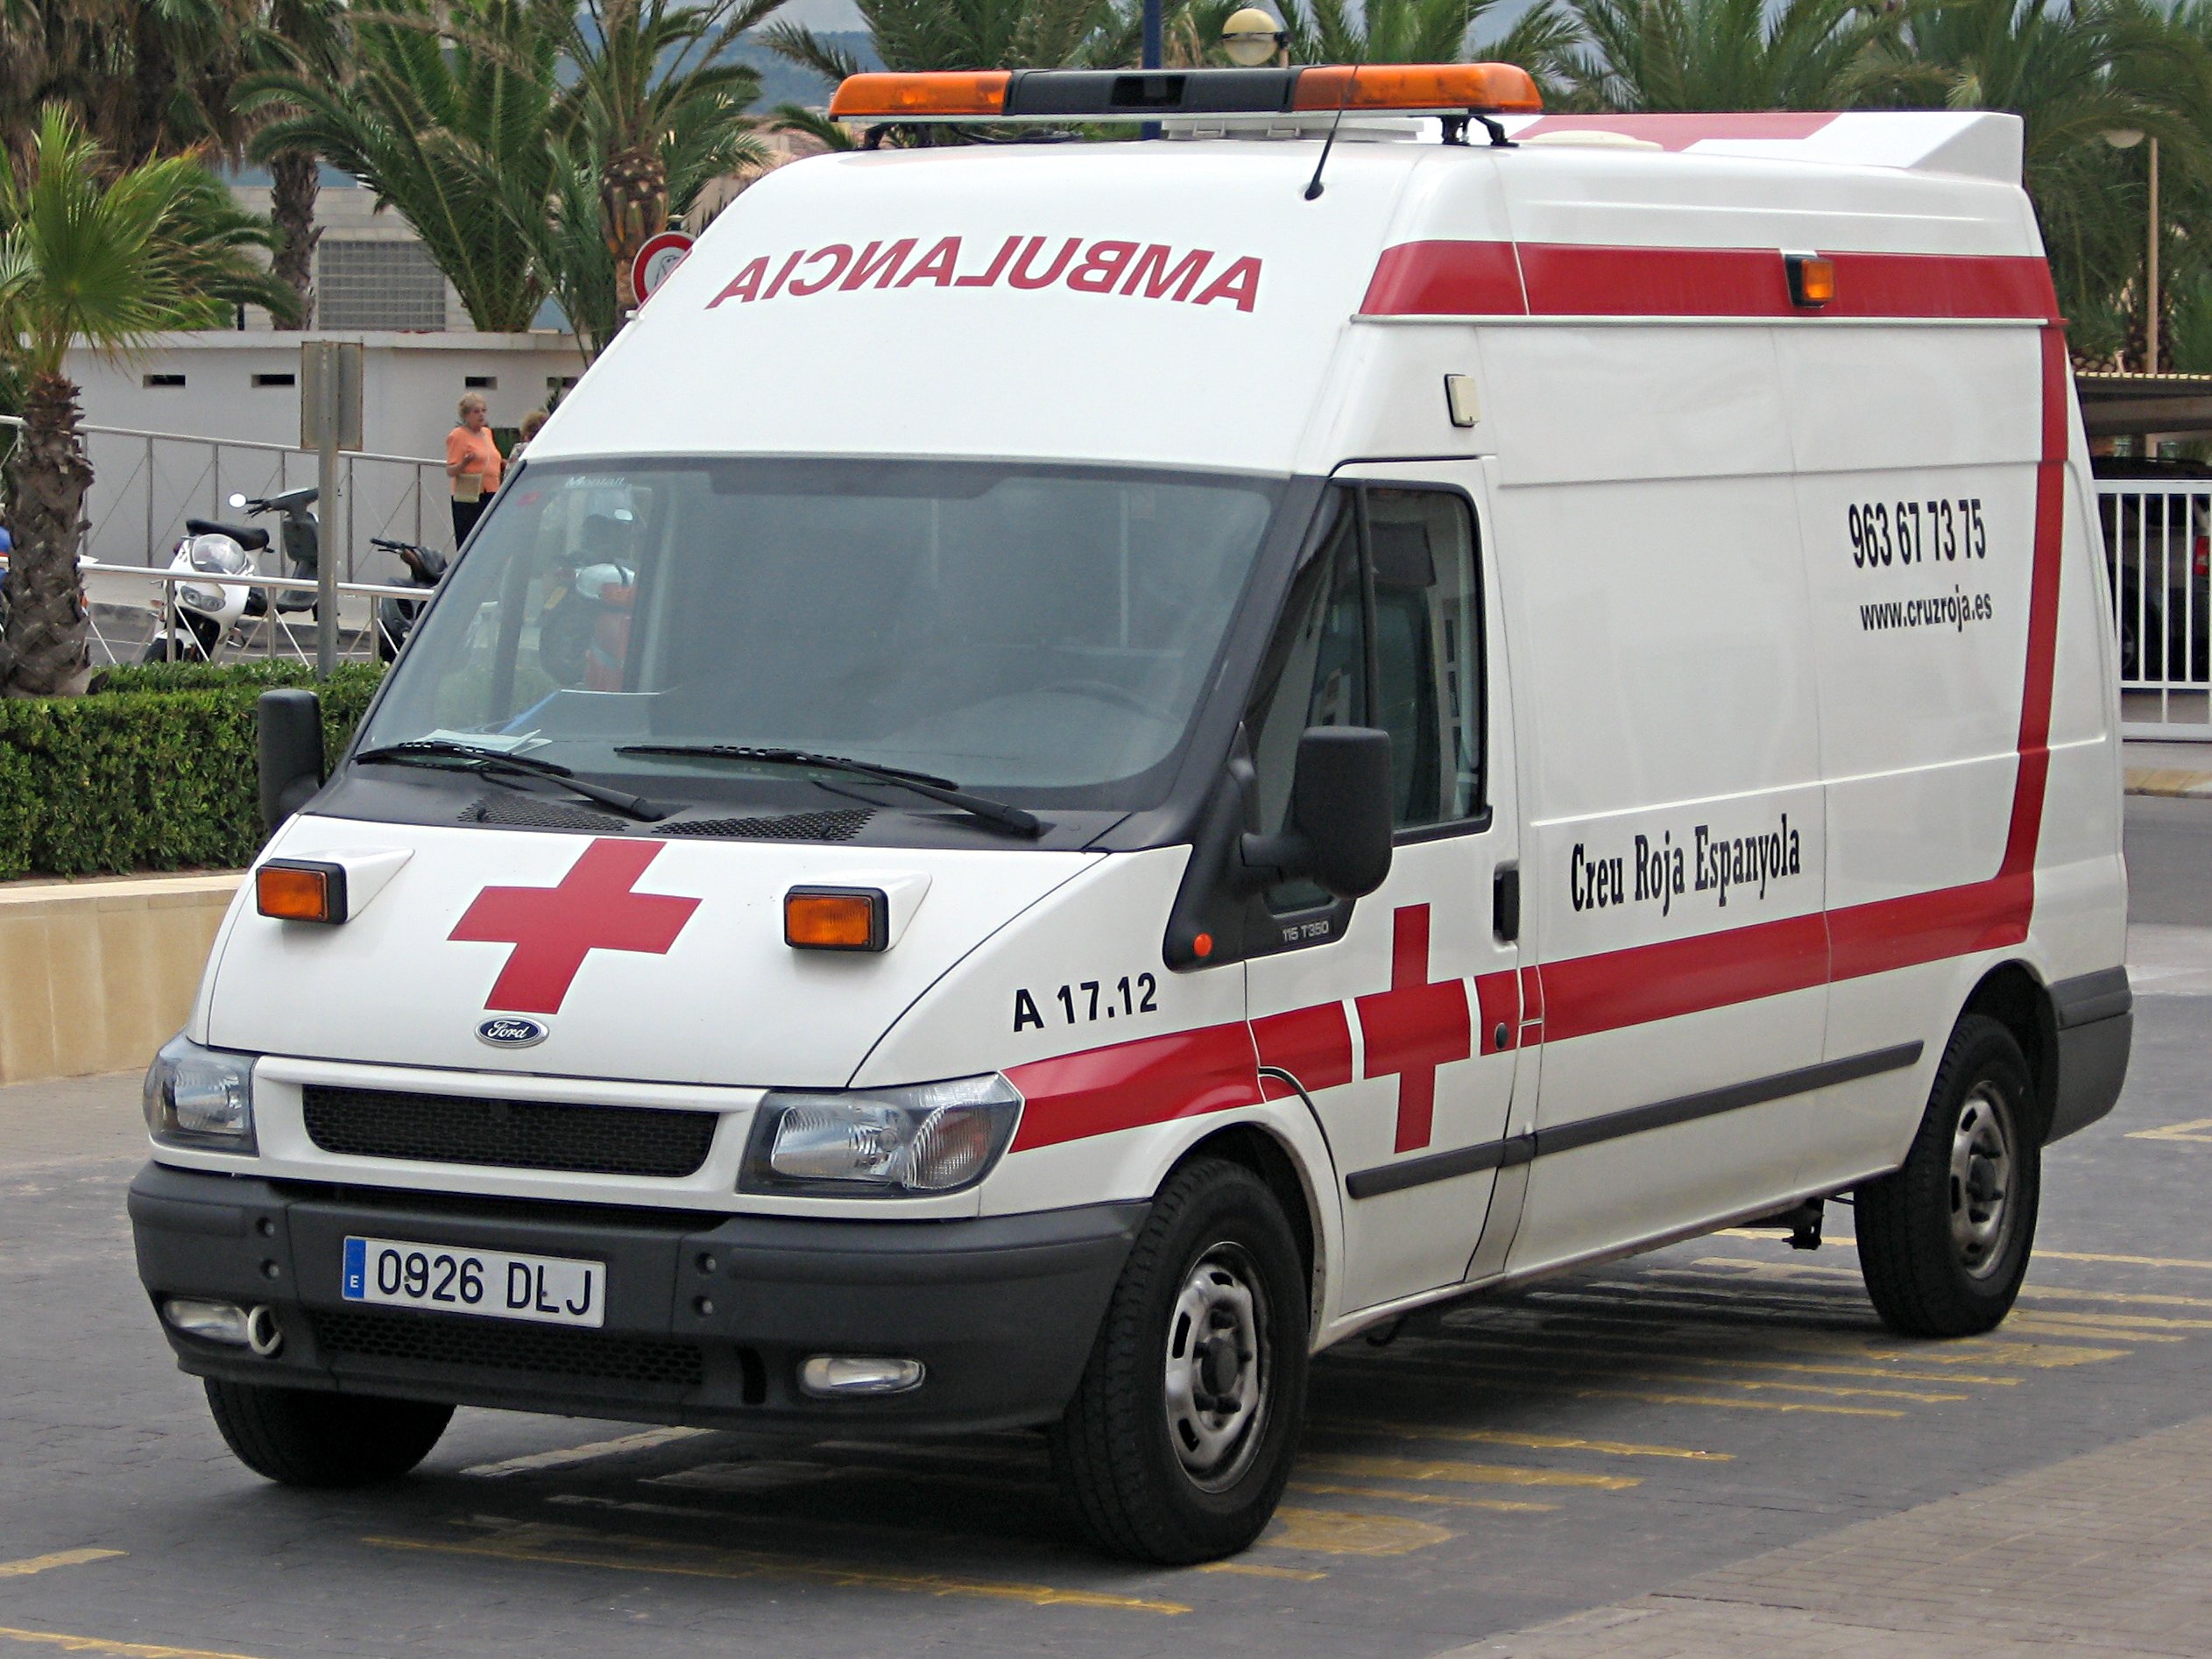 Ambulància Creu Roja